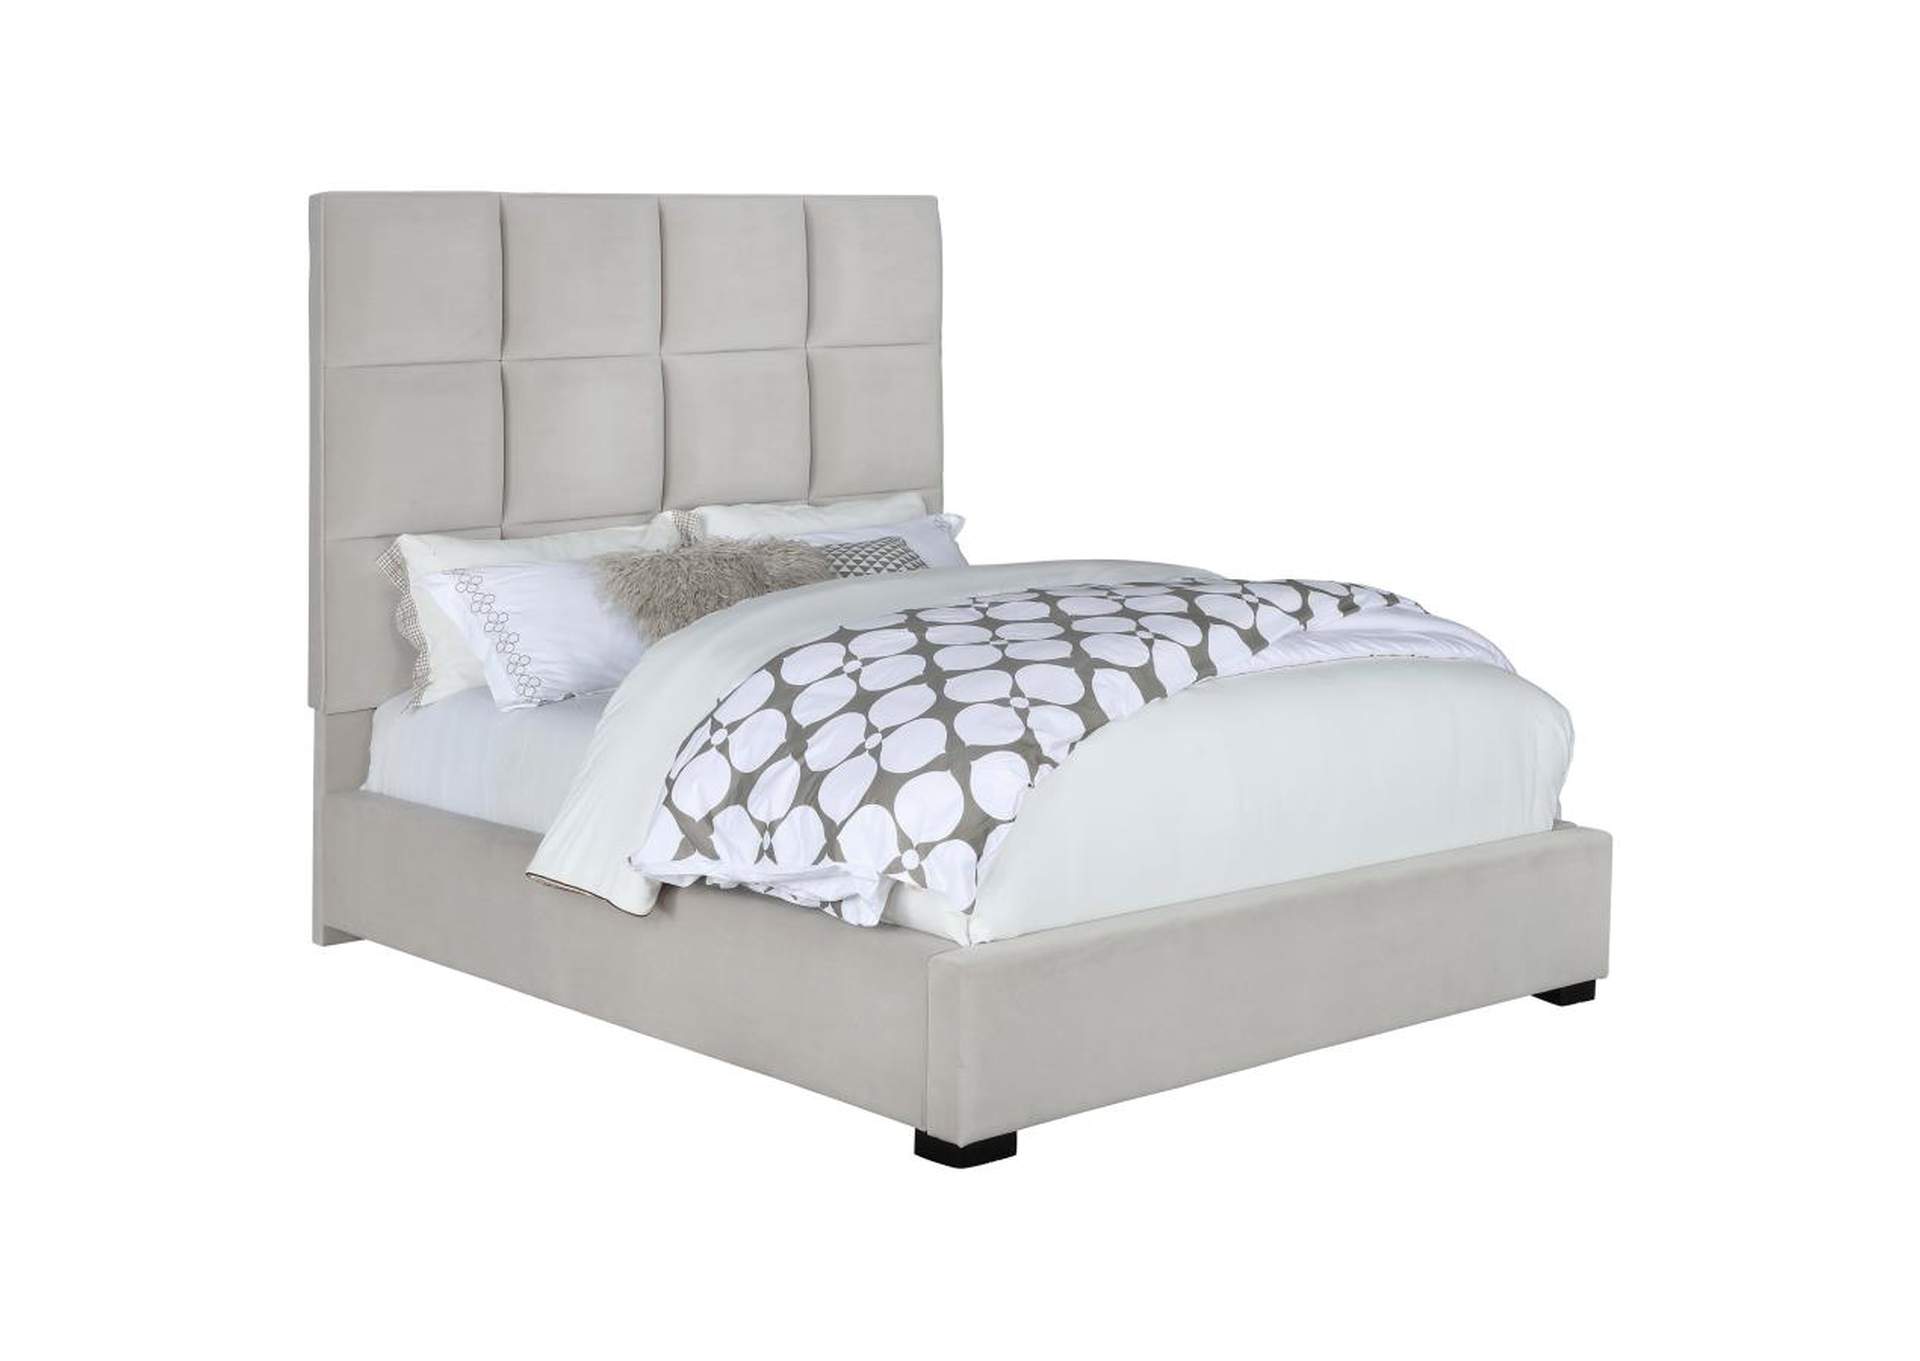 Panes Eastern King Tufted Upholstered Panel Bed Beige,Coaster Furniture